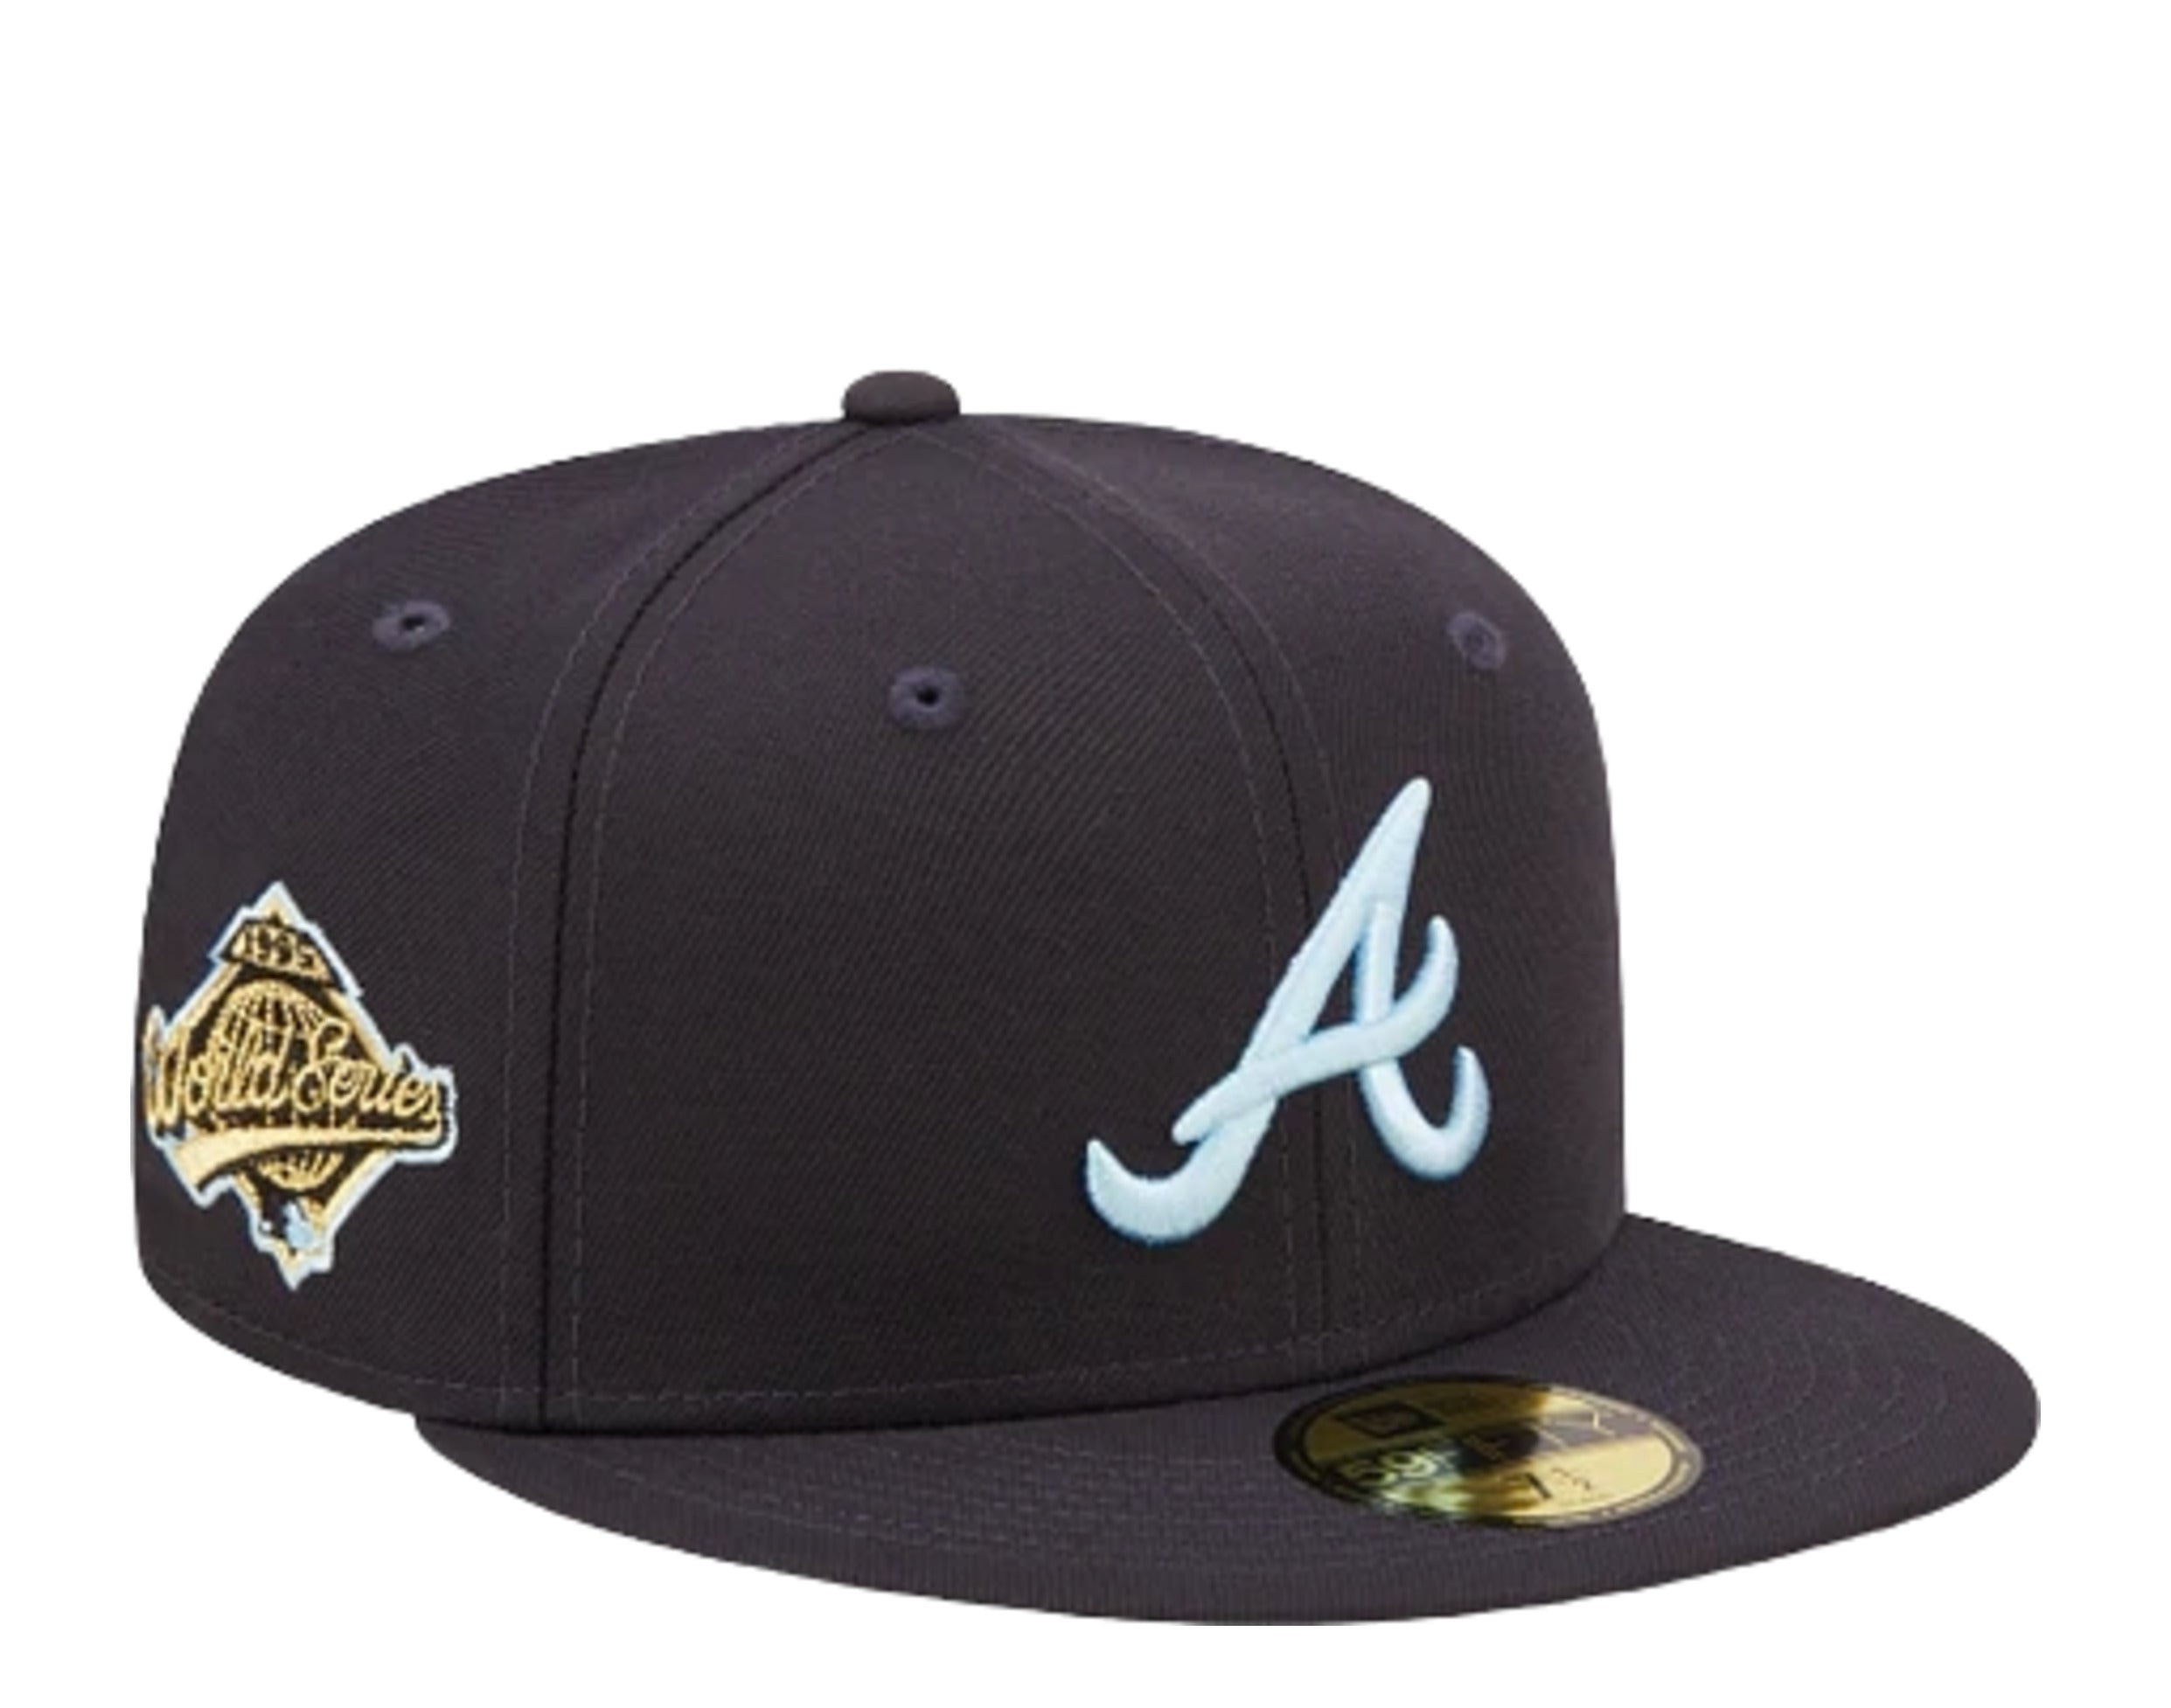 Blue New Era MLB Atlanta Braves 9FIFTY Cap